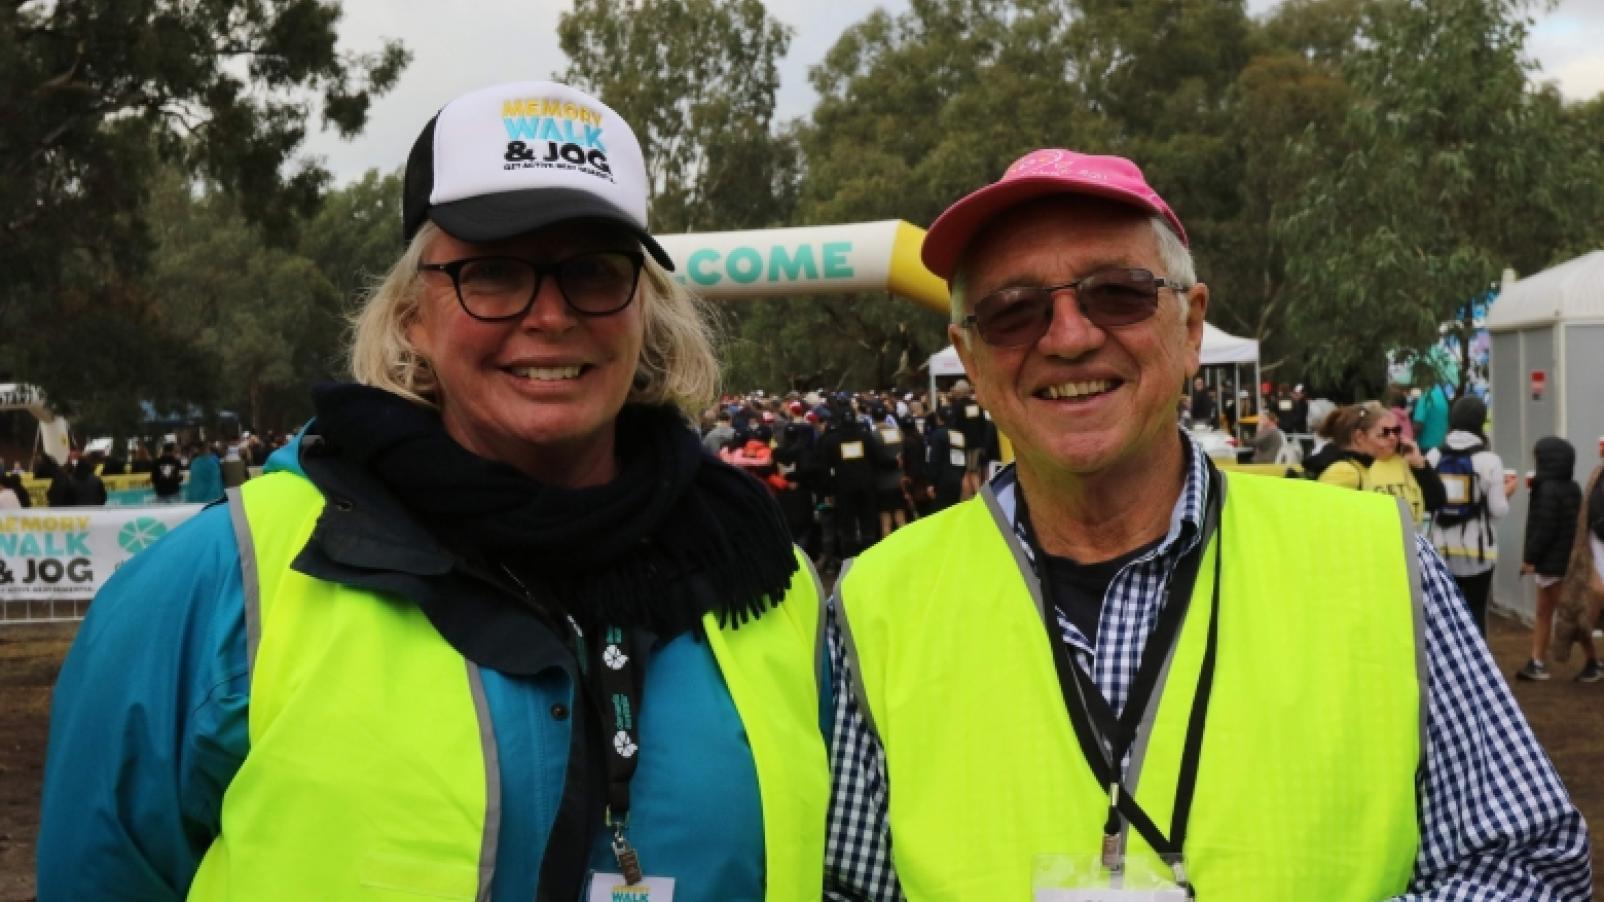 Liz Grogan and Chris Finley in hi-vis vests volunteering at the memory walk and jog event.